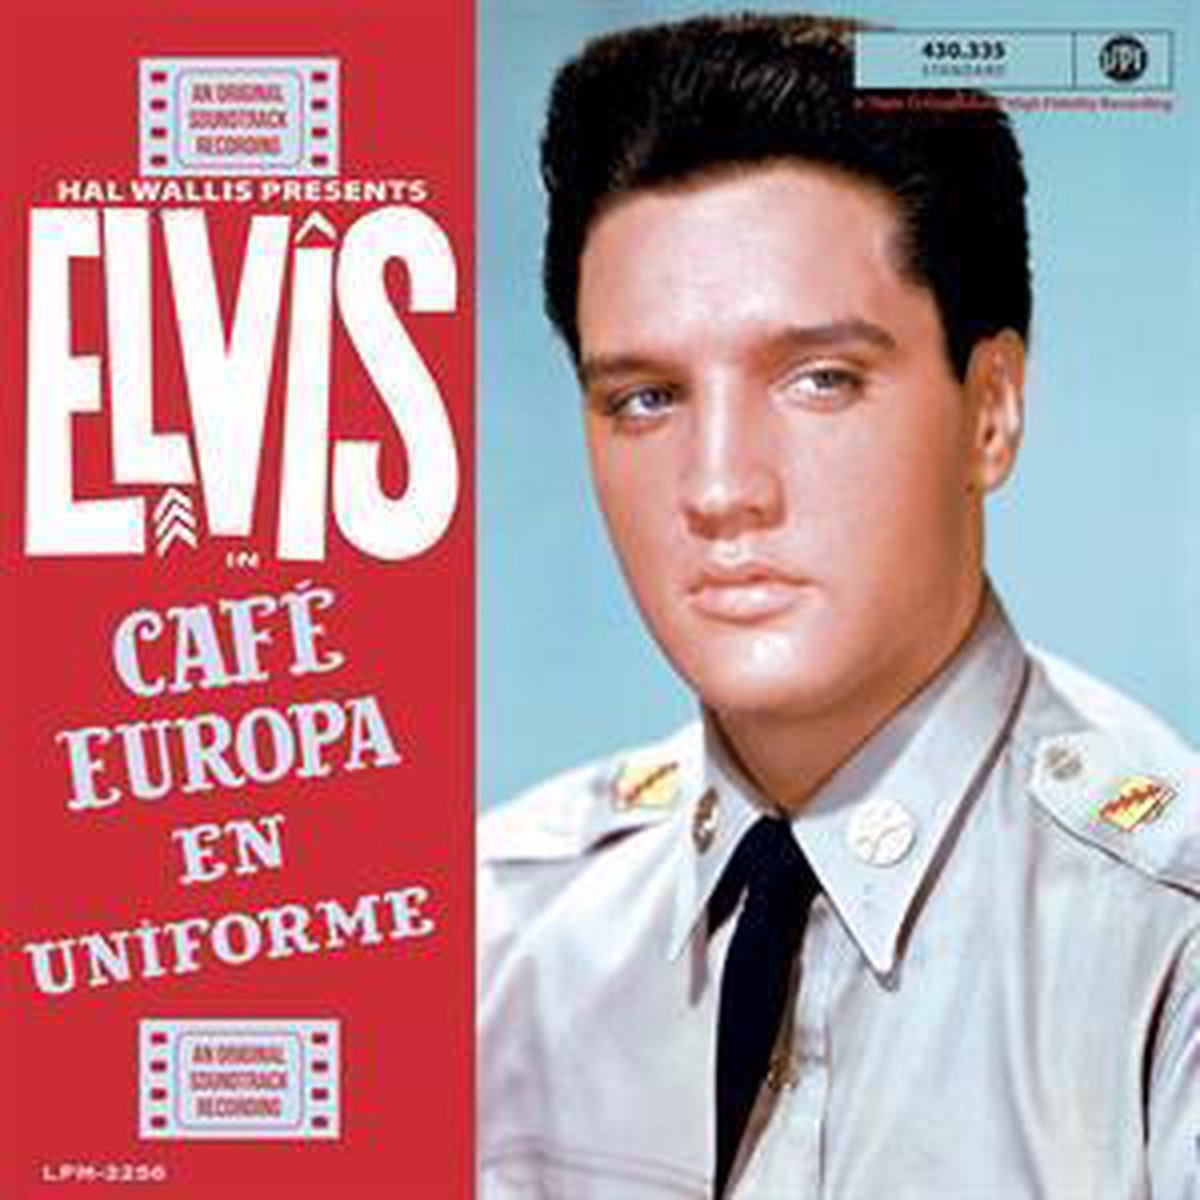 Cafe Europa En Uniforme (LP)